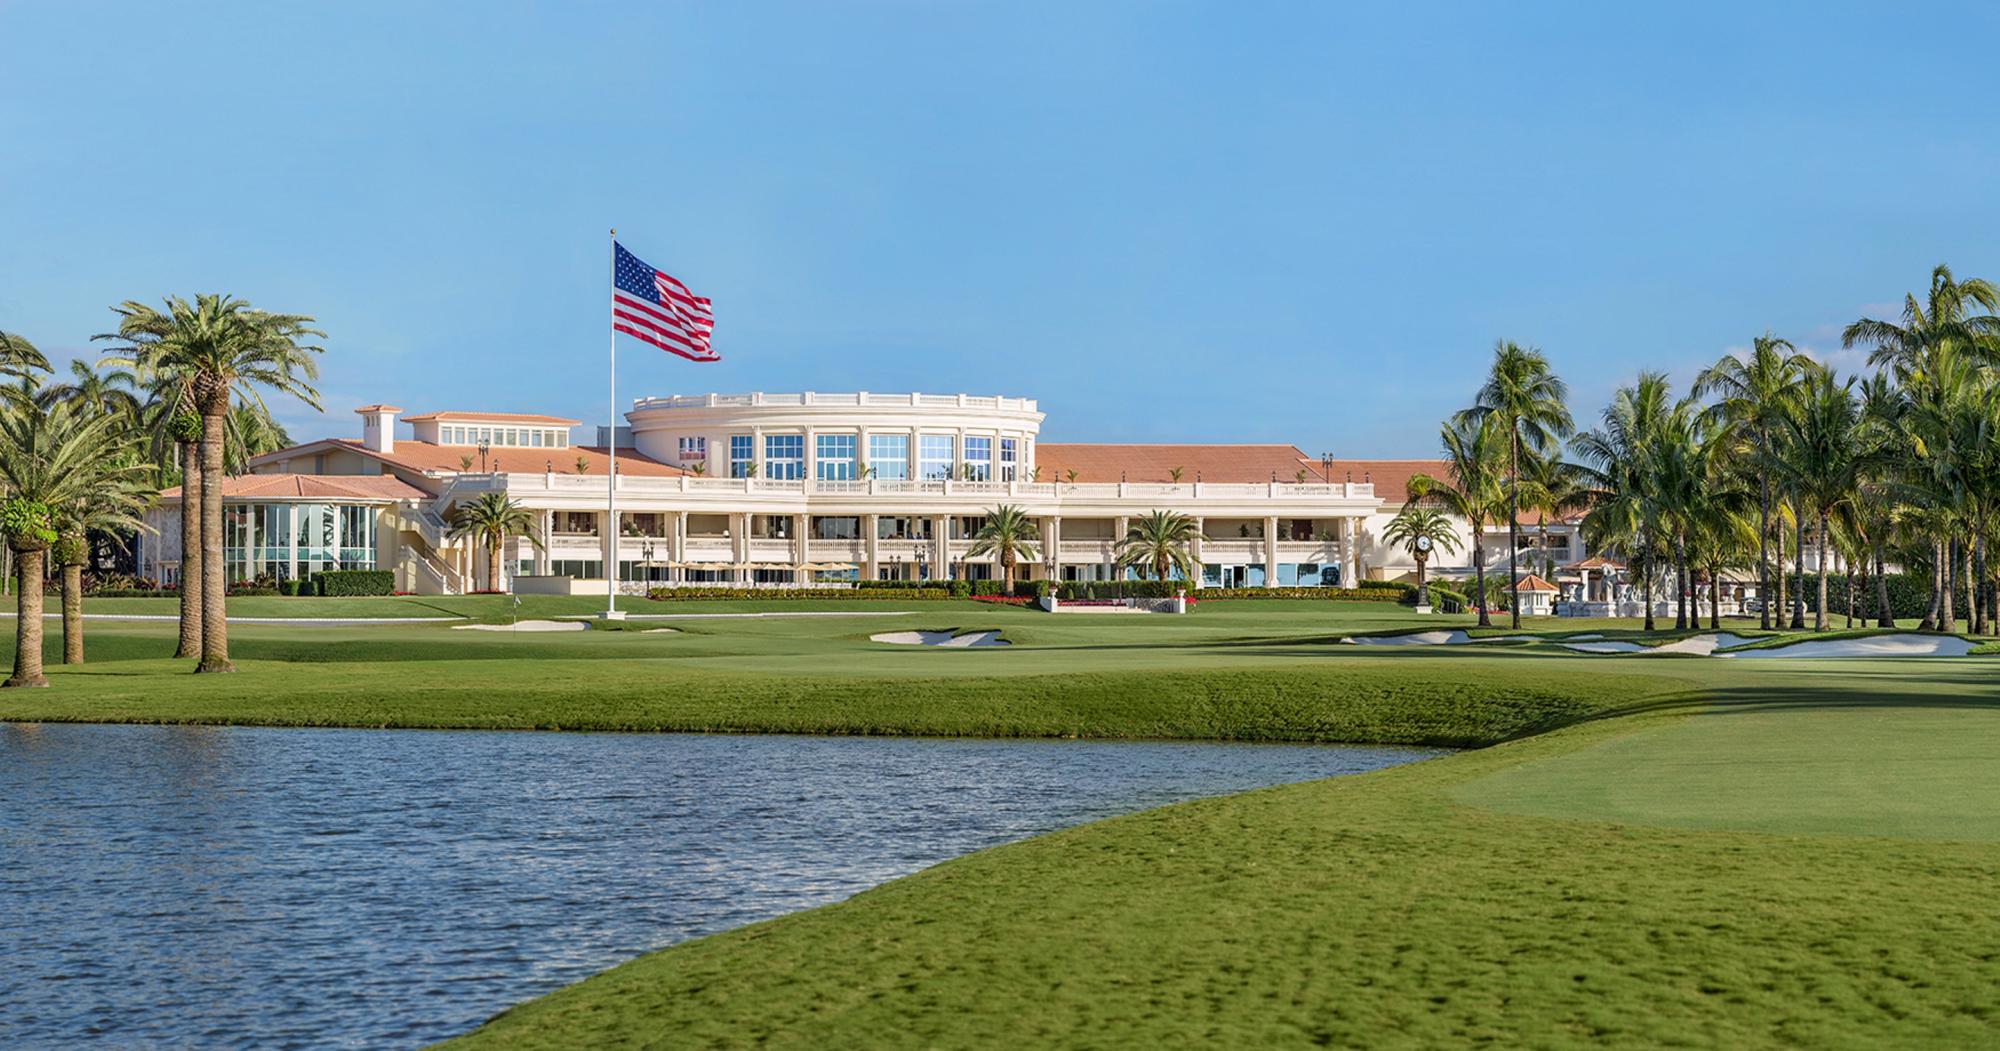 The Trump National Doral Miami's beautiful hotel in amazing Florida.